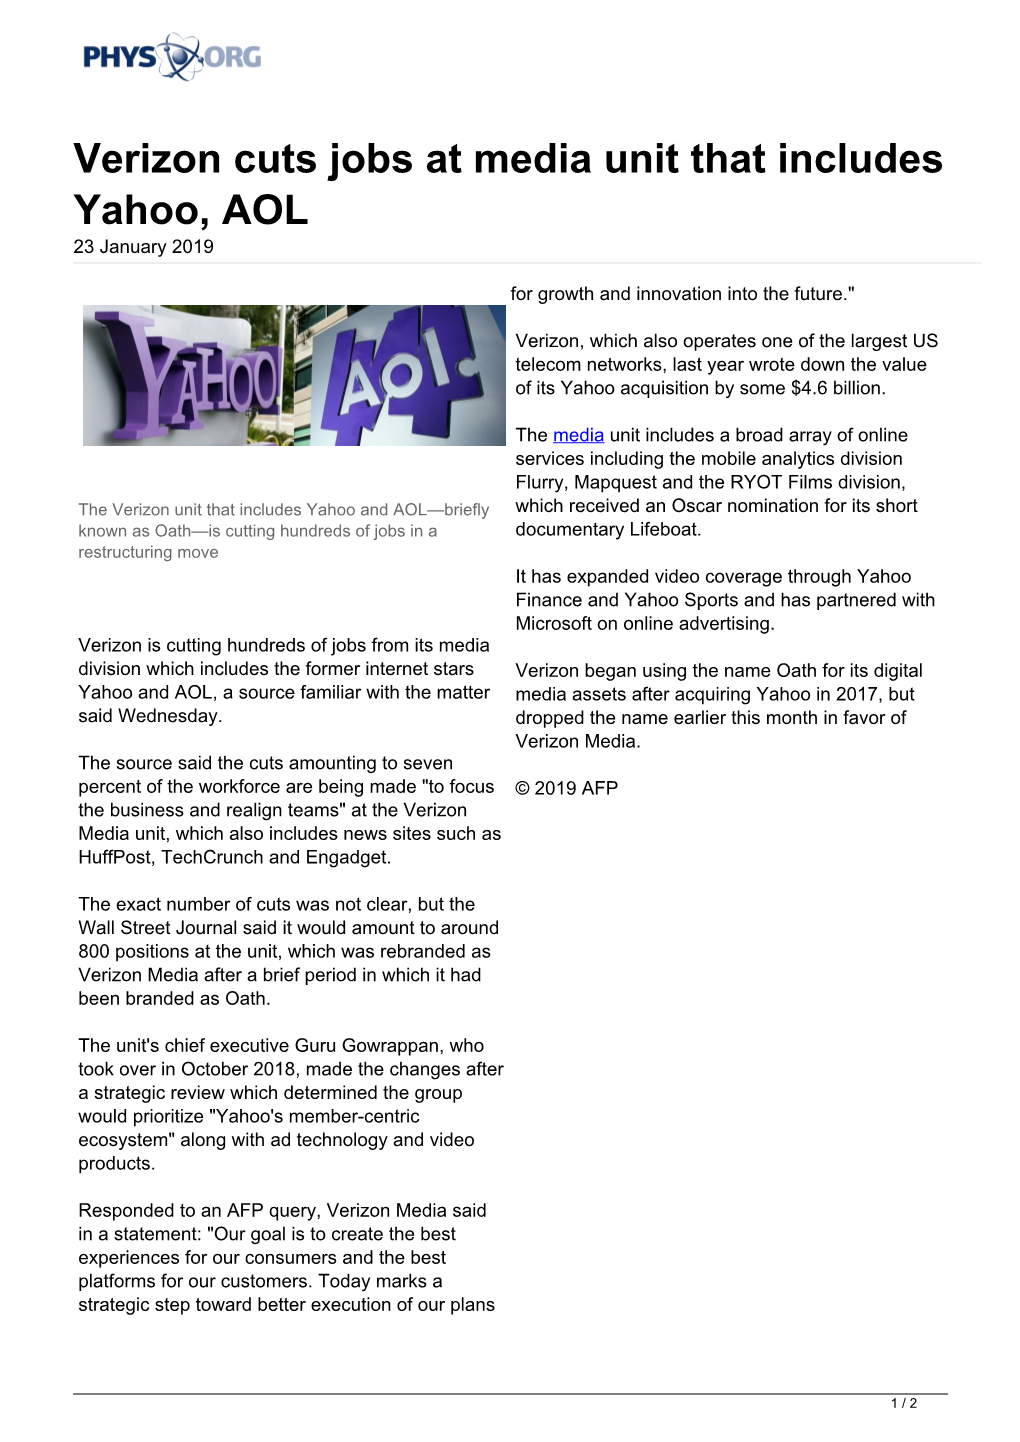 Verizon Cuts Jobs at Media Unit That Includes Yahoo, AOL 23 January 2019